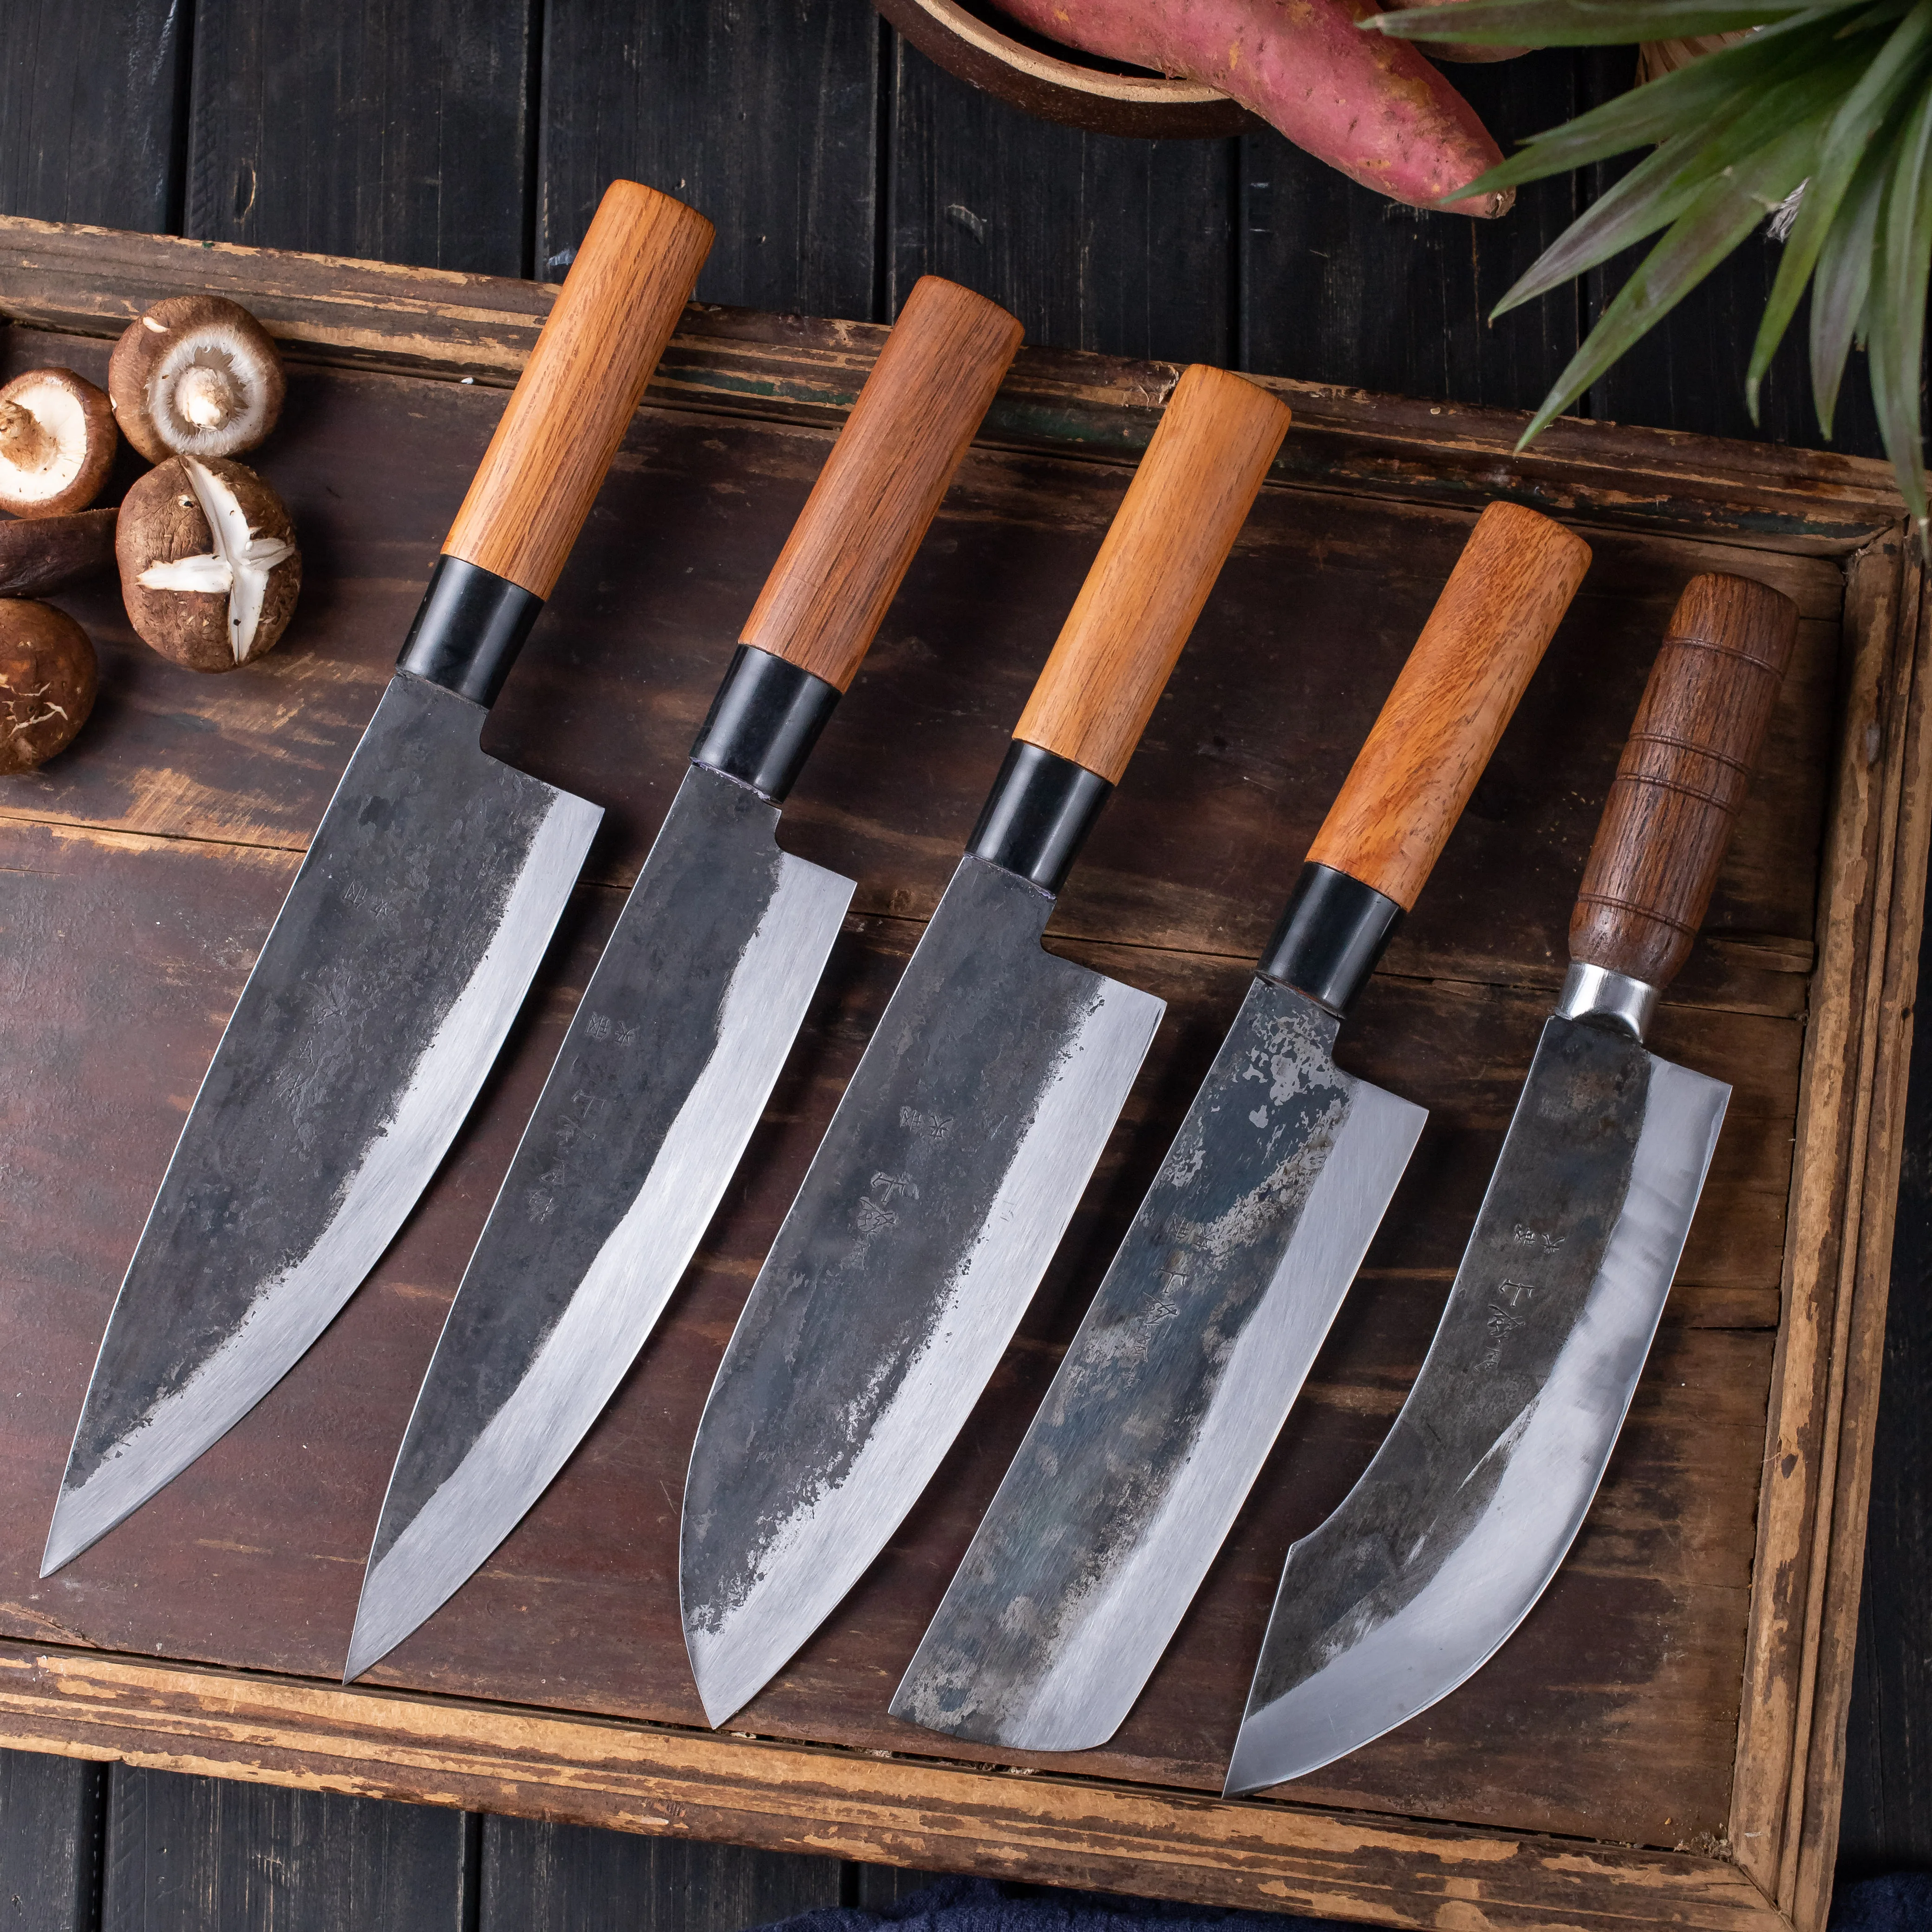 Handmade High Quality Professional Clip Steel Butcher Knife Chef Slicing Santoku Knife Slaughter House Boning Knives Cleaver